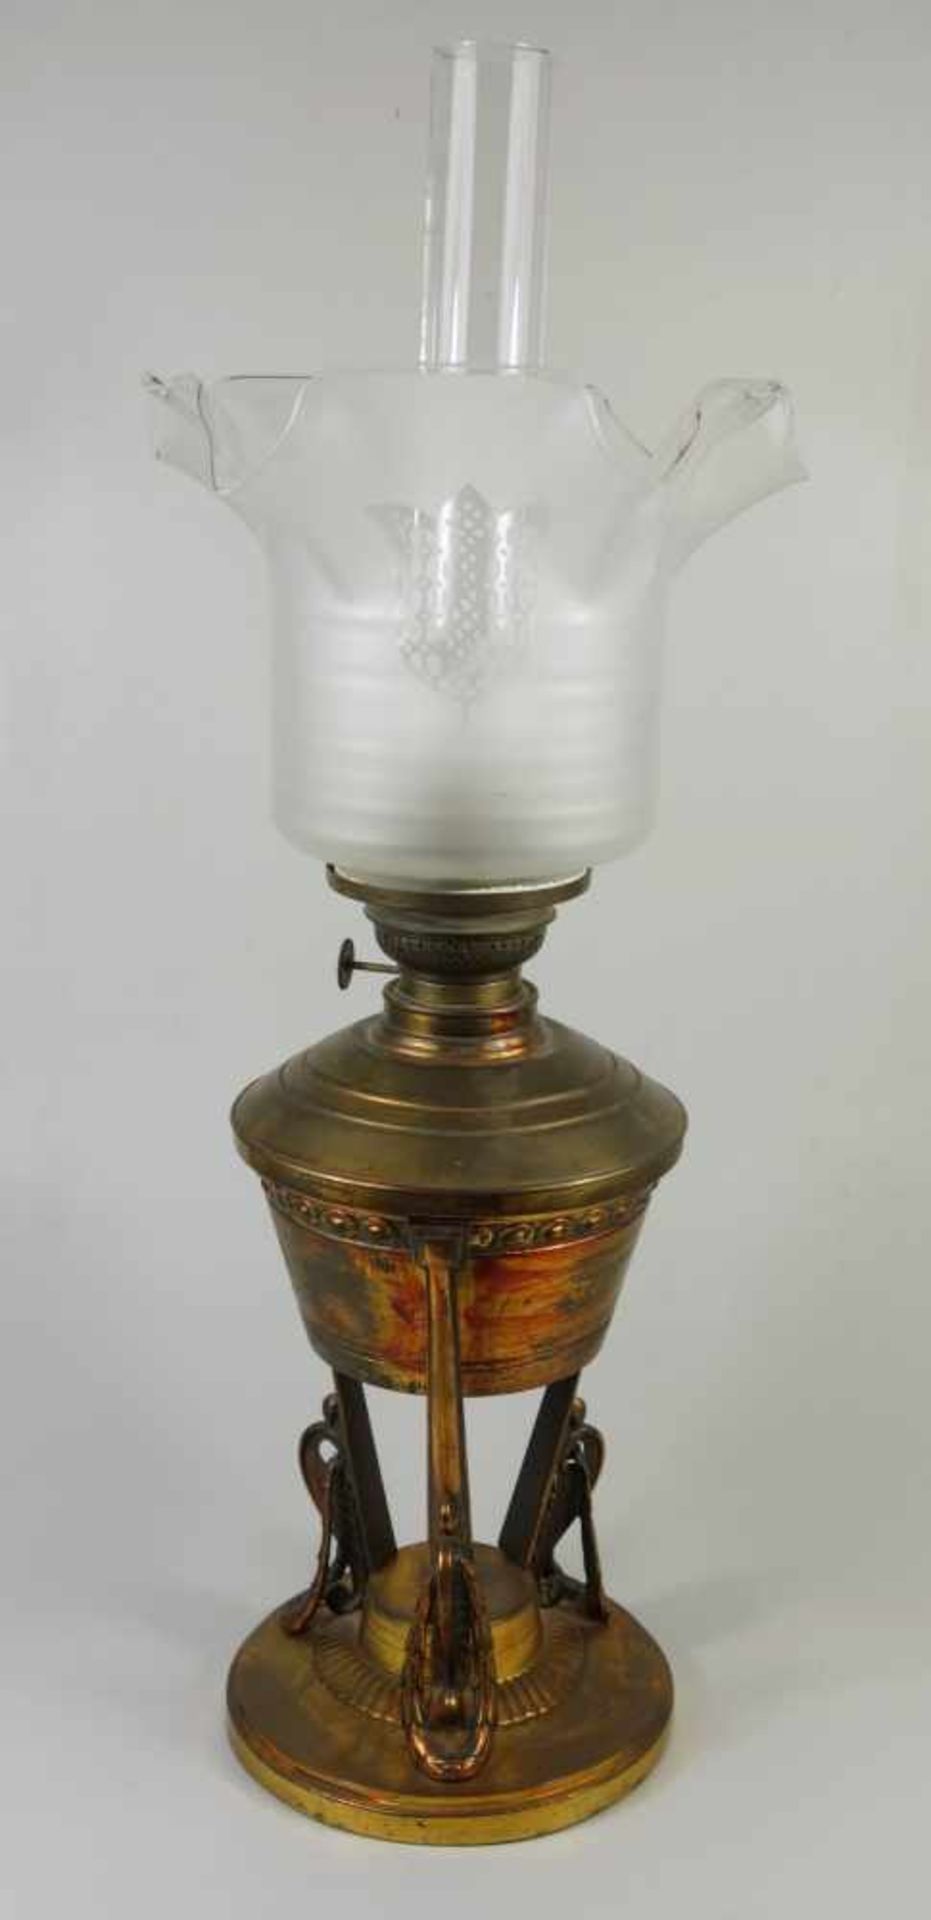 Petroleumlampe, Jugendstil um 1910 Messing mit Jugendstilornamenten, satinierter Glasschirm mit